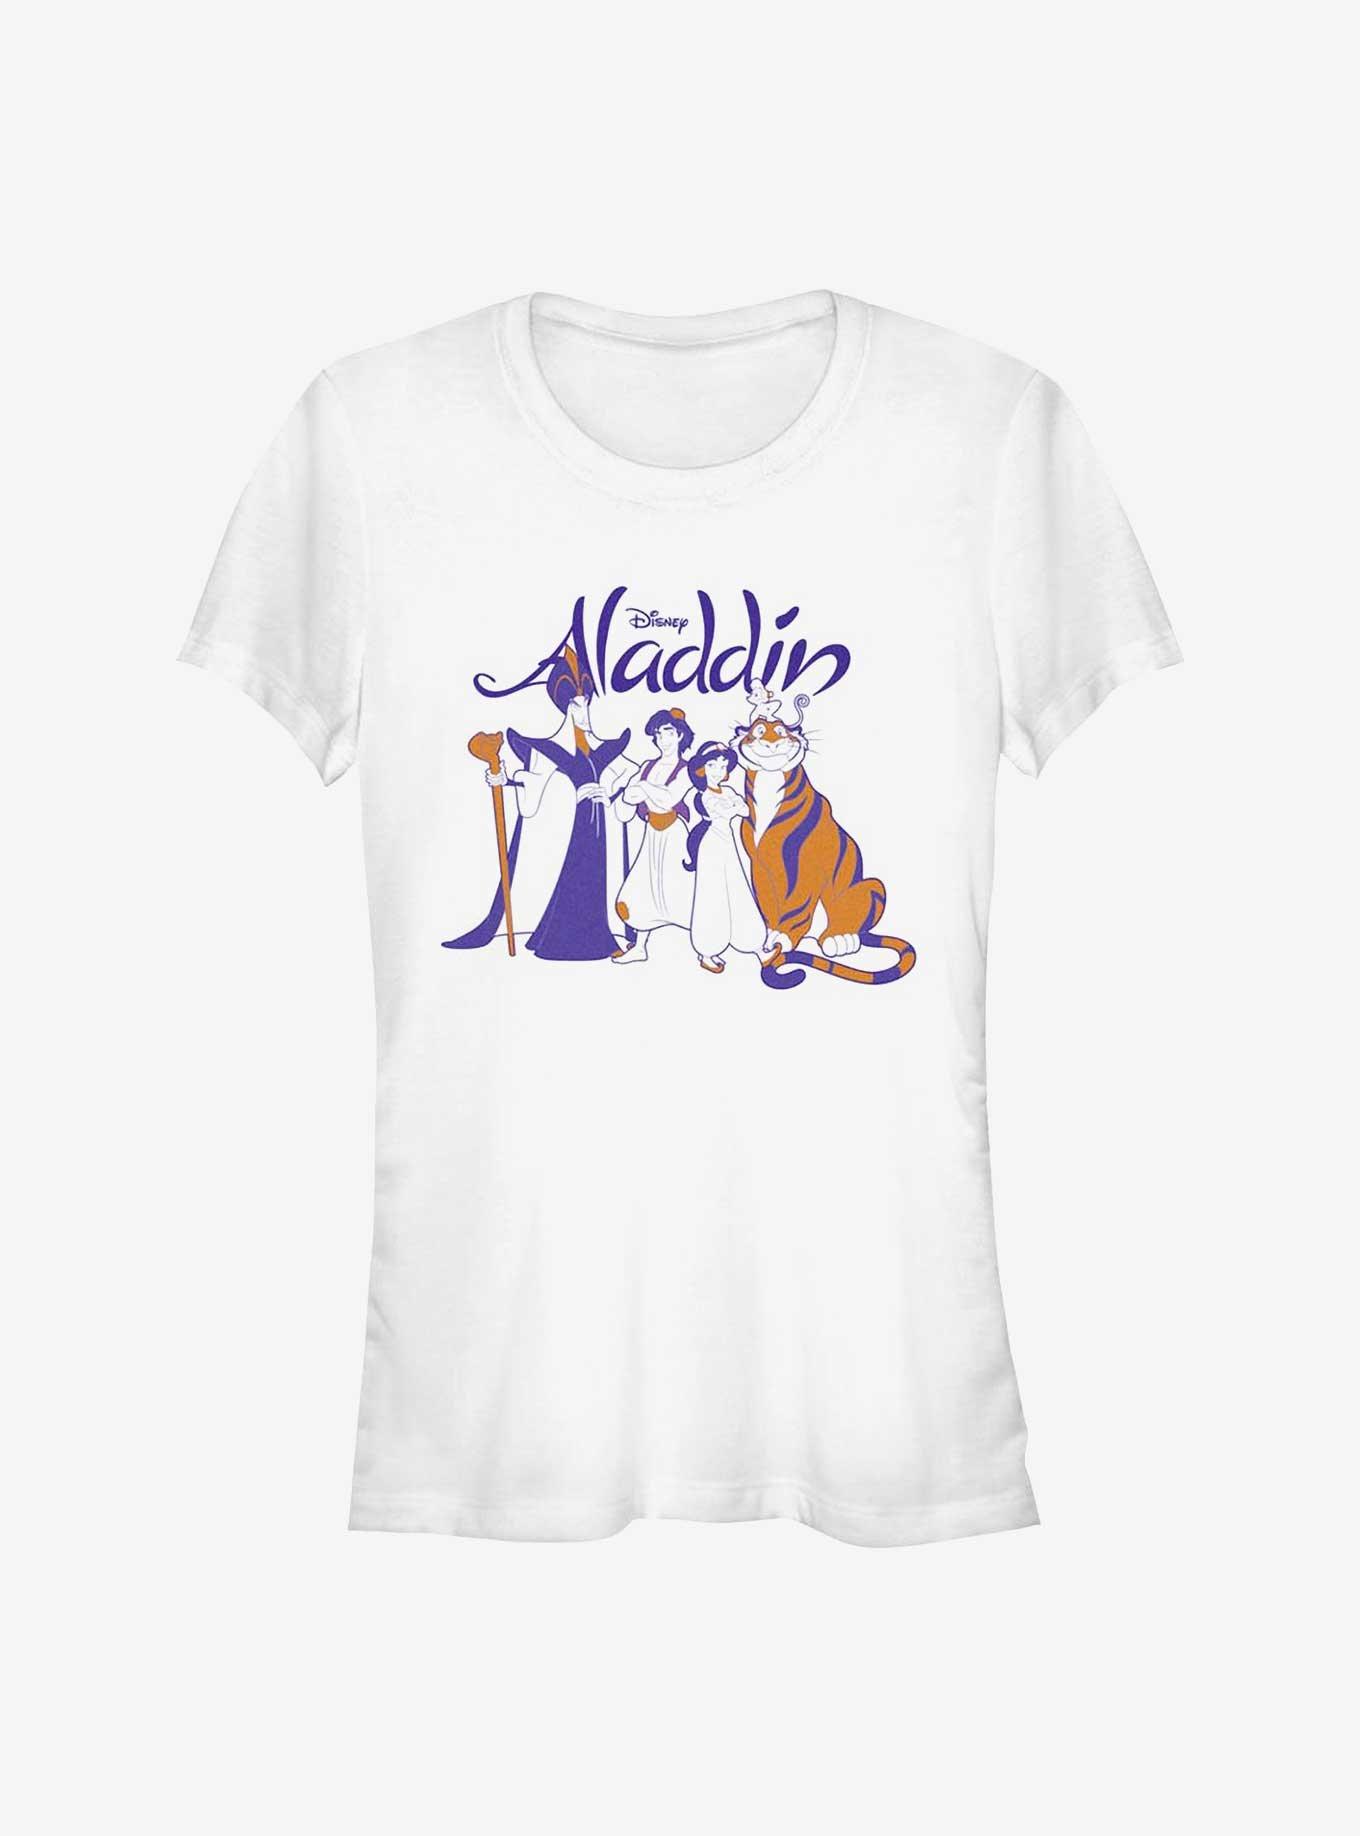 Disney Aladdin Group Shot Girls T-Shirt